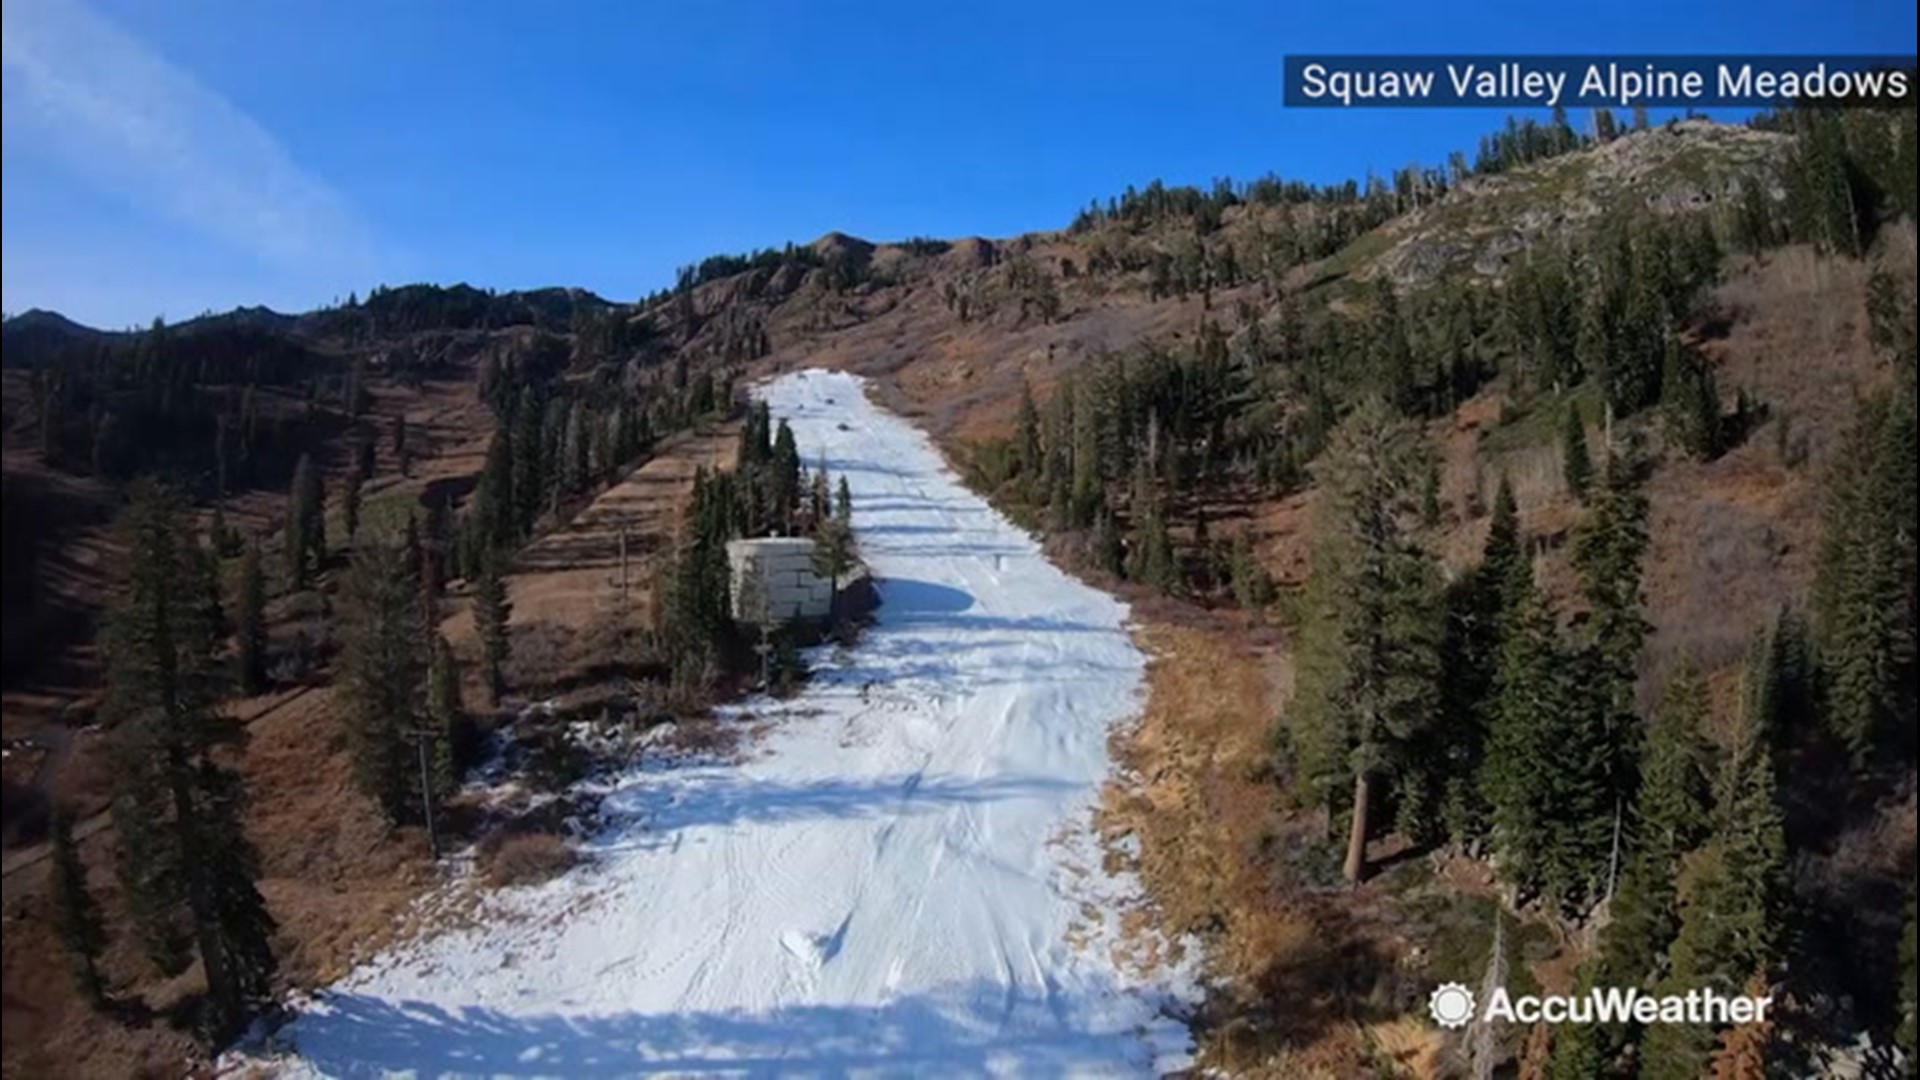 On Nov. 12, Squaw Valley Alpine Meadows ski resort, in California, prepares for it's opening day for the 2019-2020 season on Friday, Nov. 15.